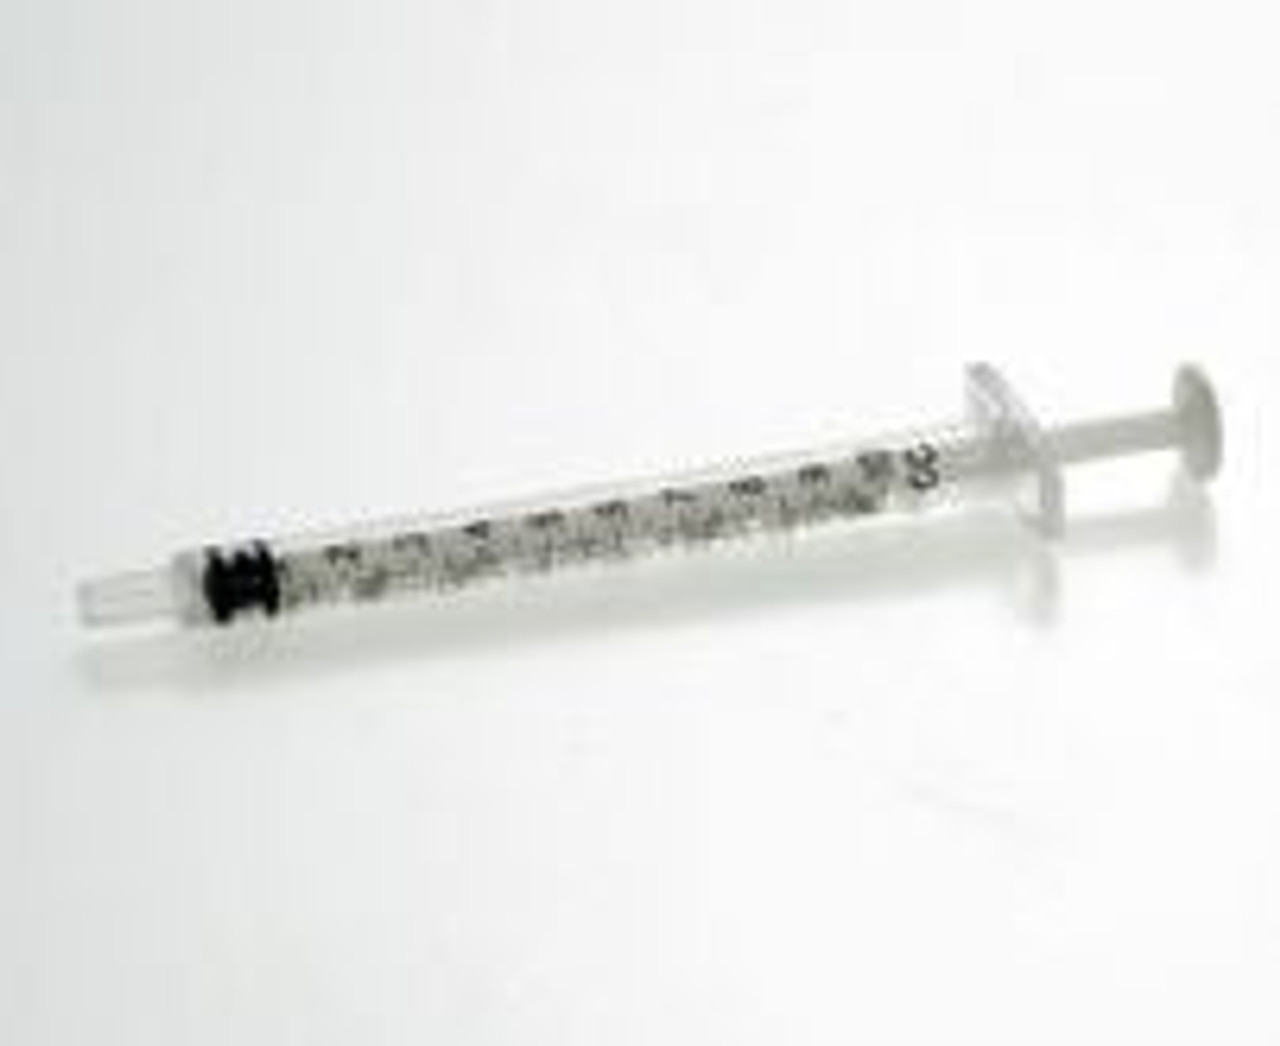 Syringe 1ml SOL-CARE (25G x 1)